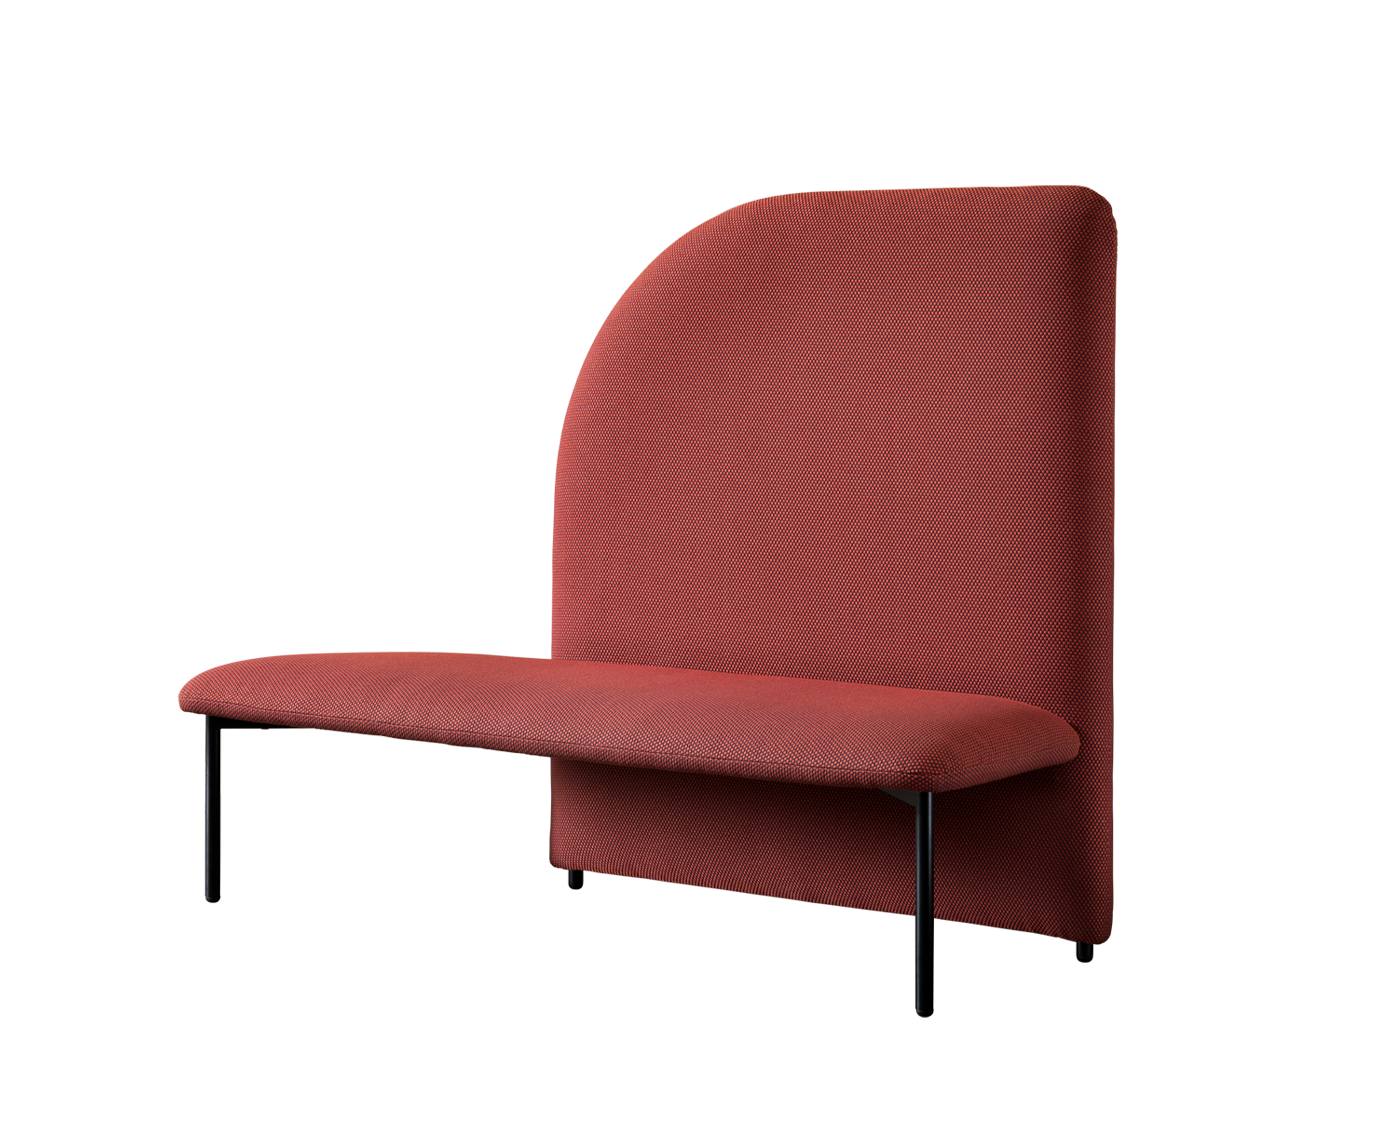 Marino Seating System | Miniforms